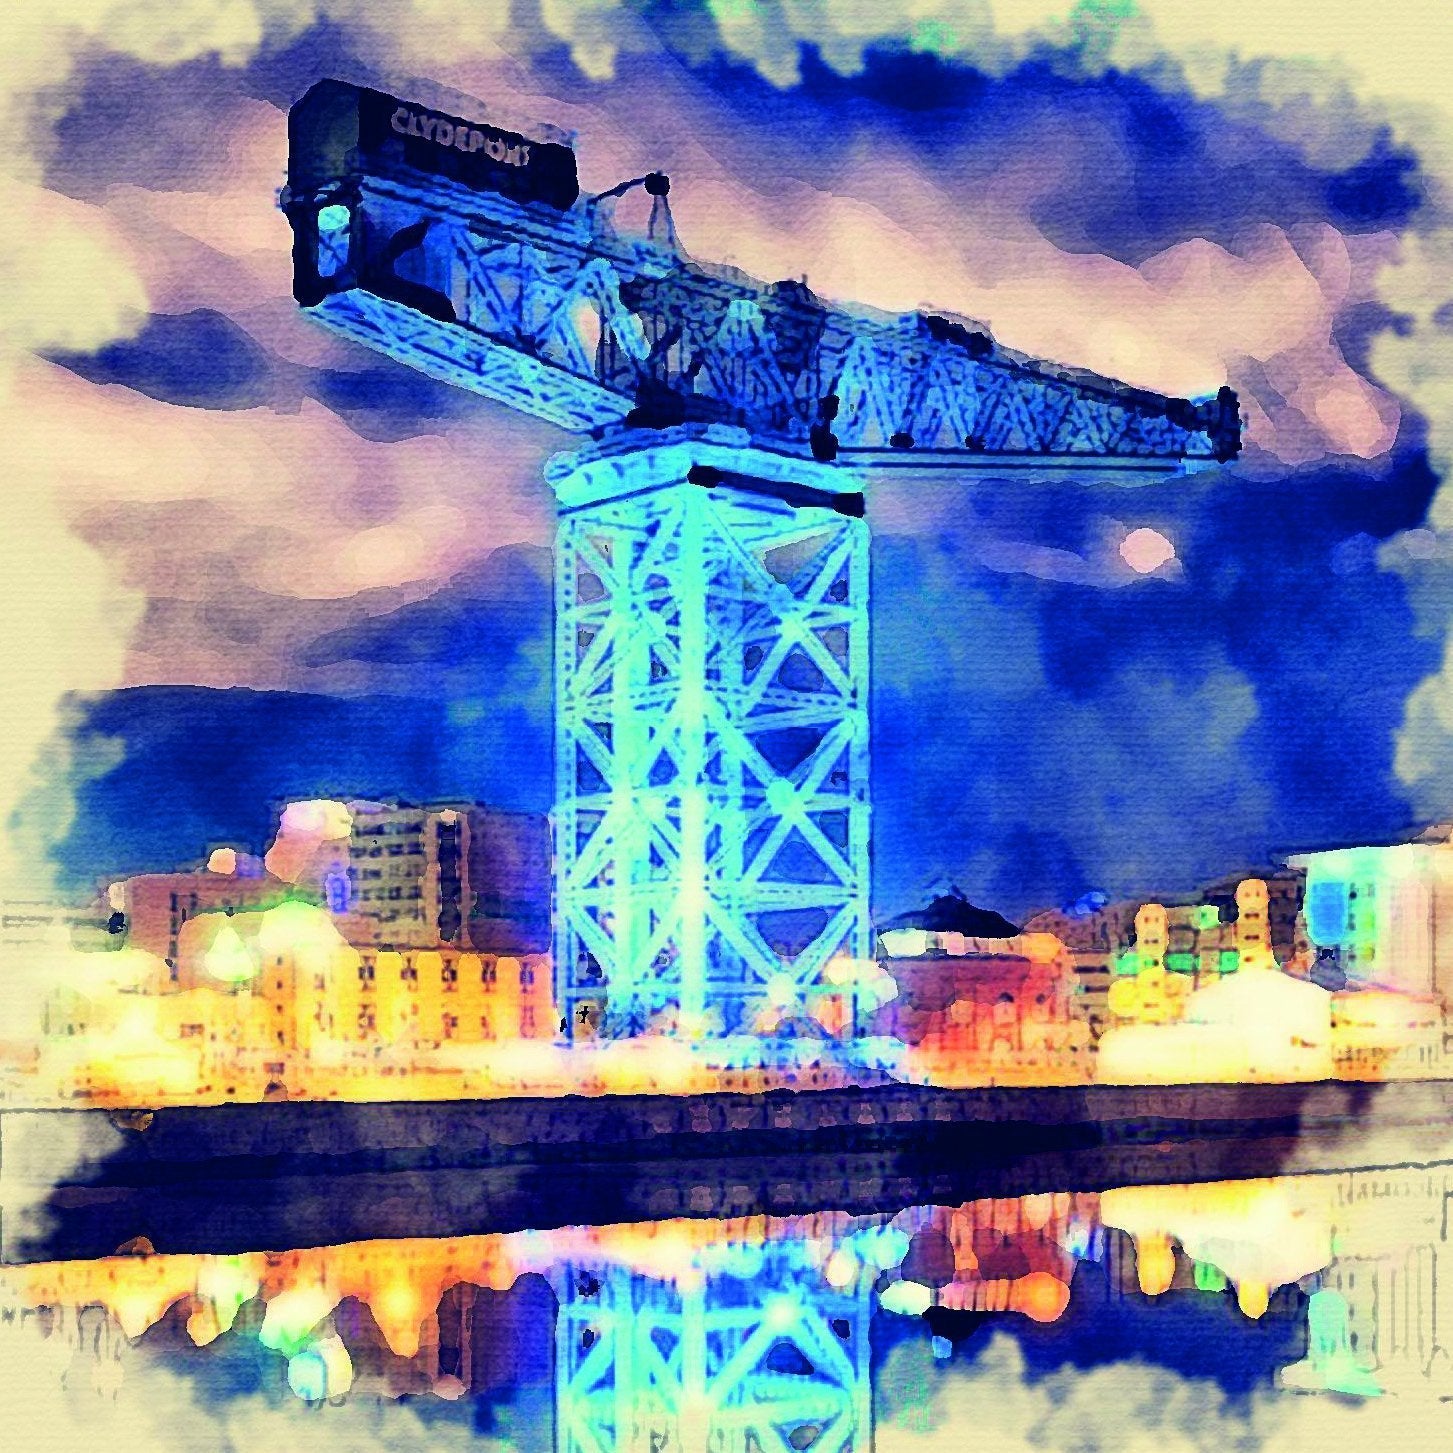 Glasgow Finnieston Crane At Night 0046 - The National